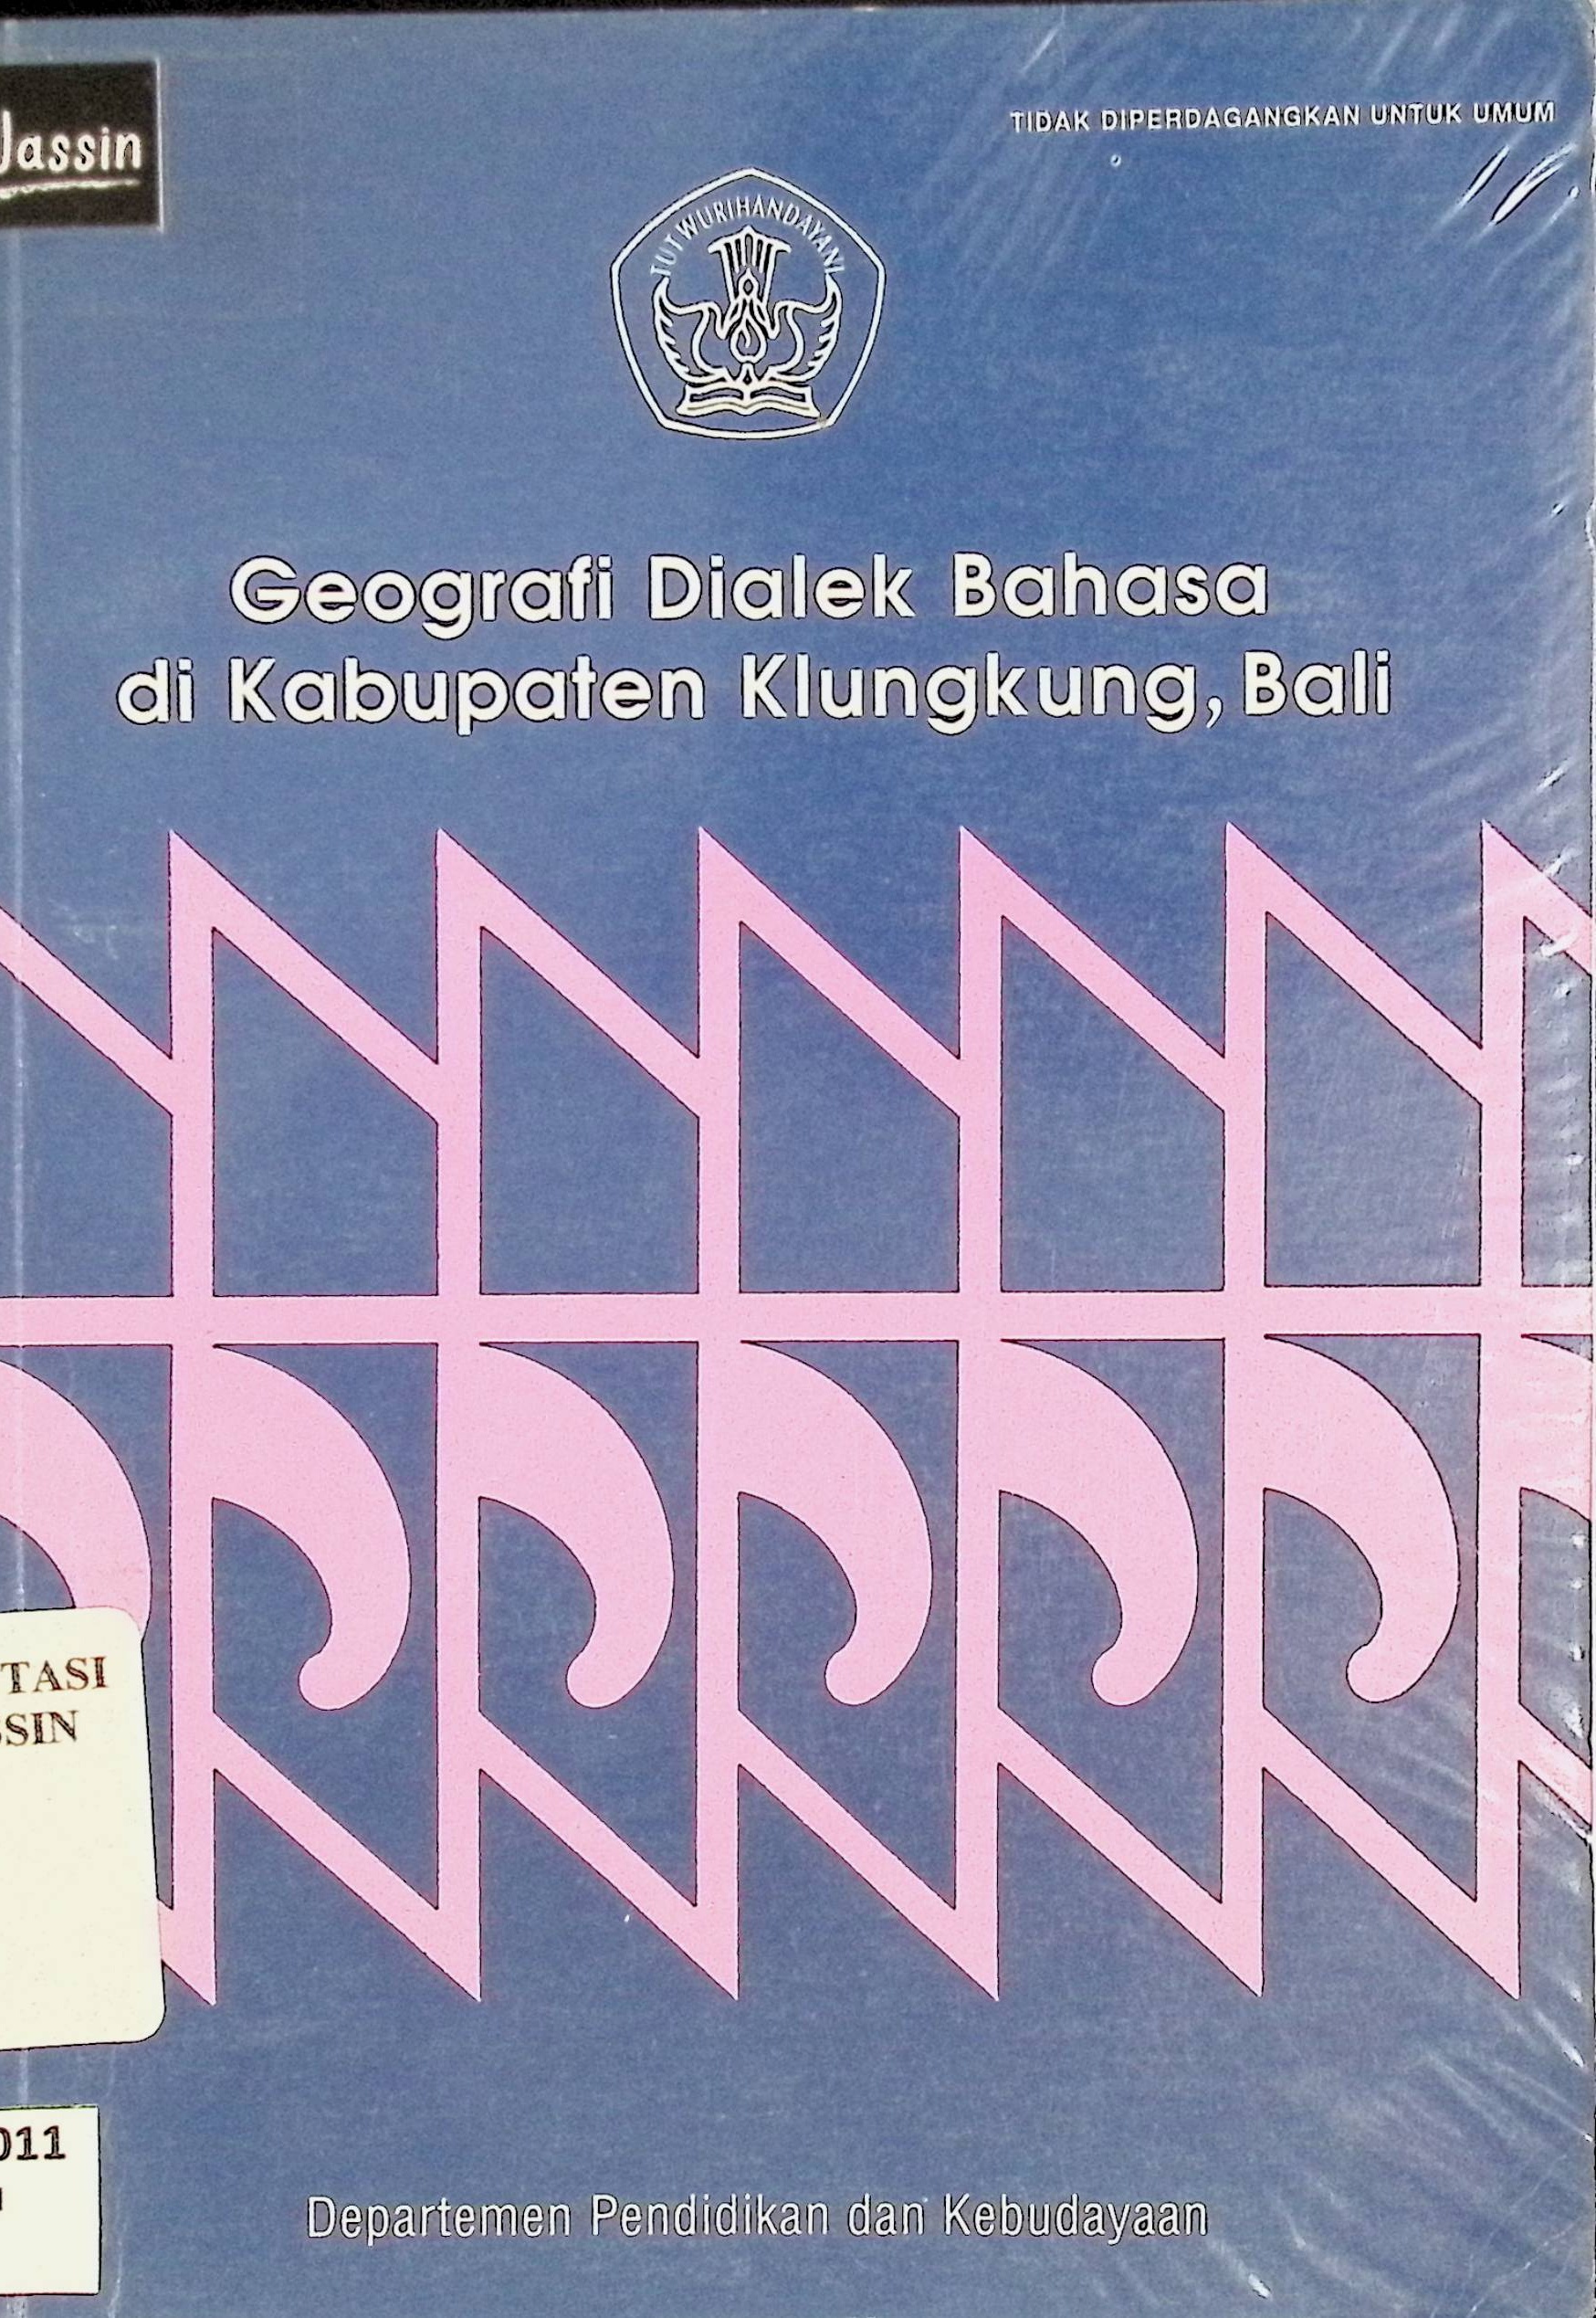 Geografi dialek bahasa di Kabupaten Klungkung, Bali